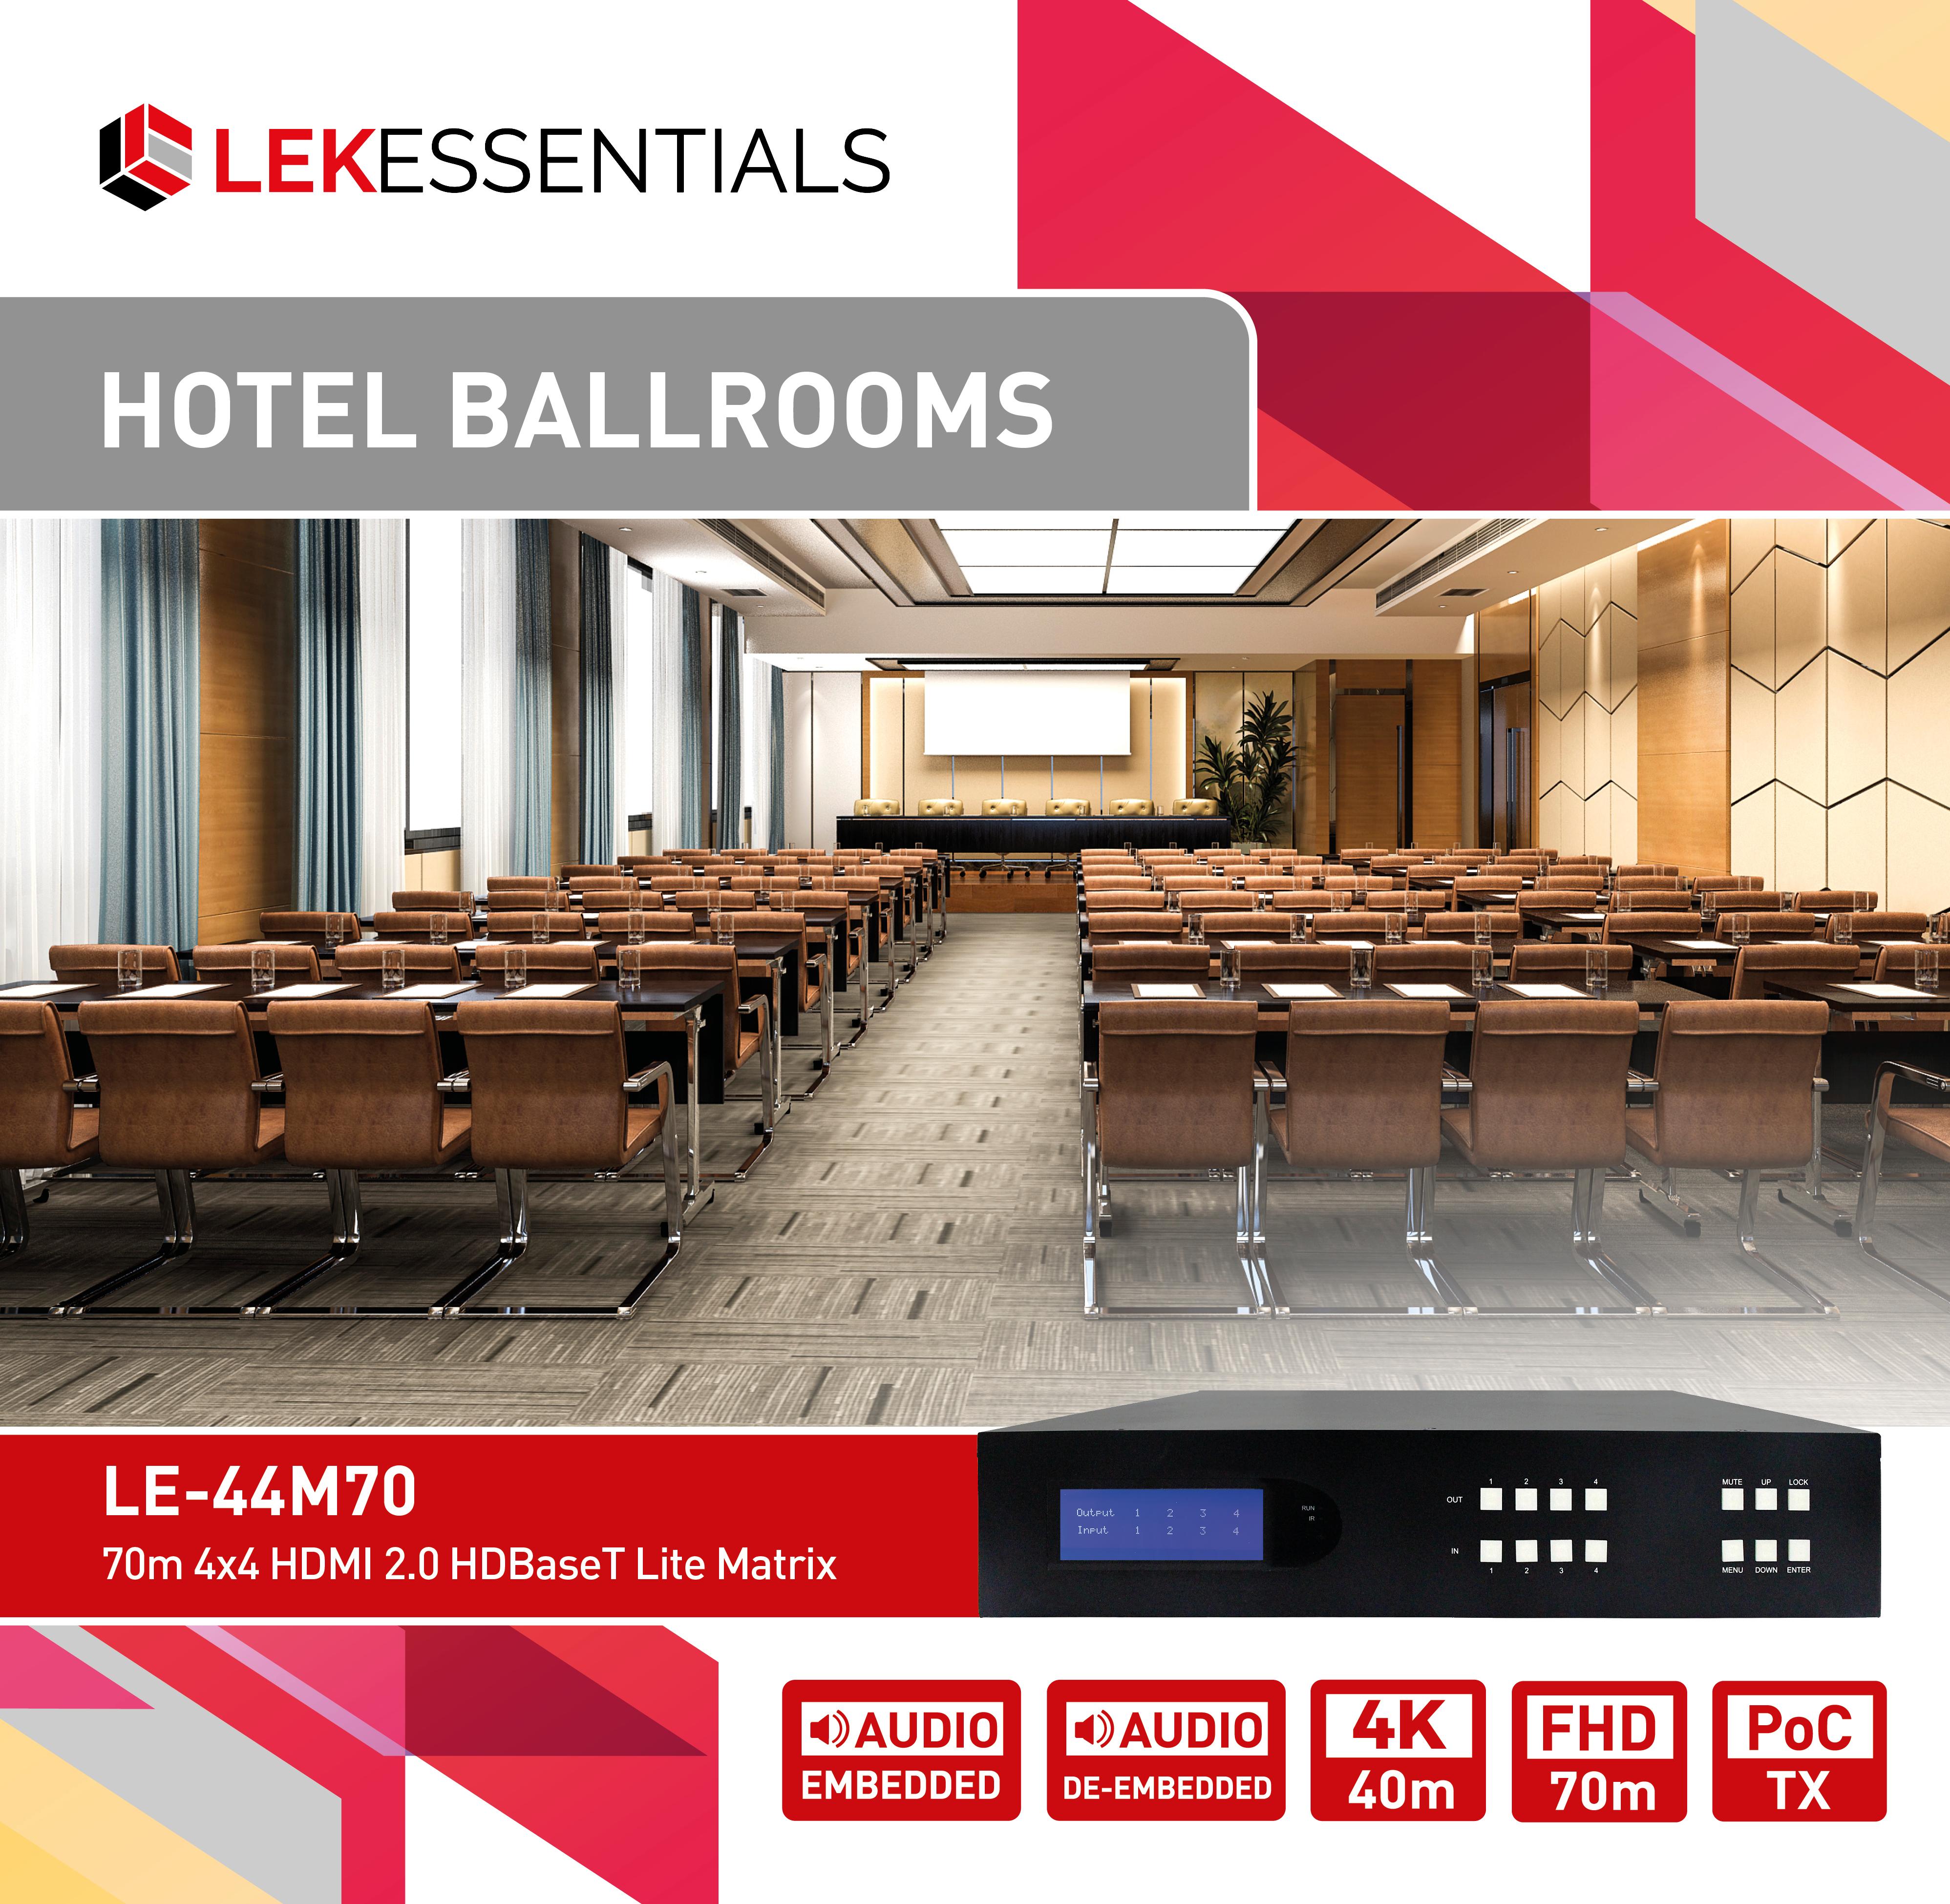 LE-44M70 Hotel Ballrooms